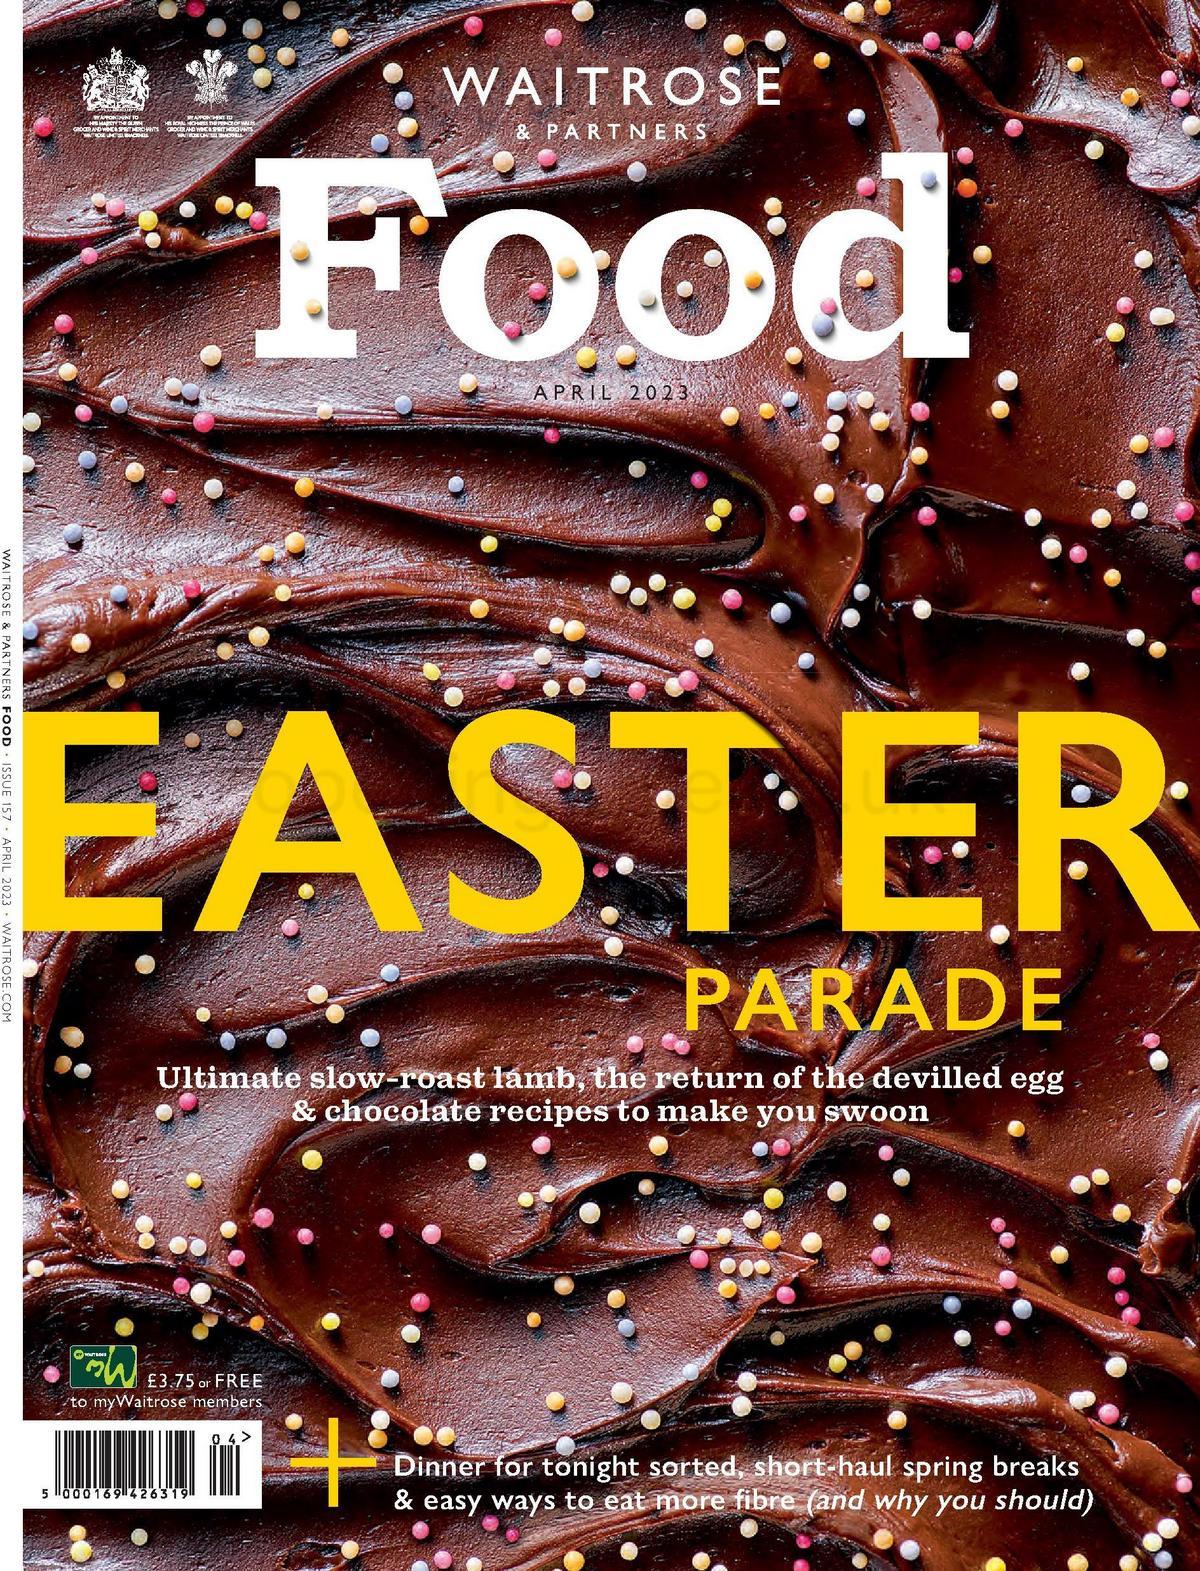 Waitrose Magazine April Offers from 1 April